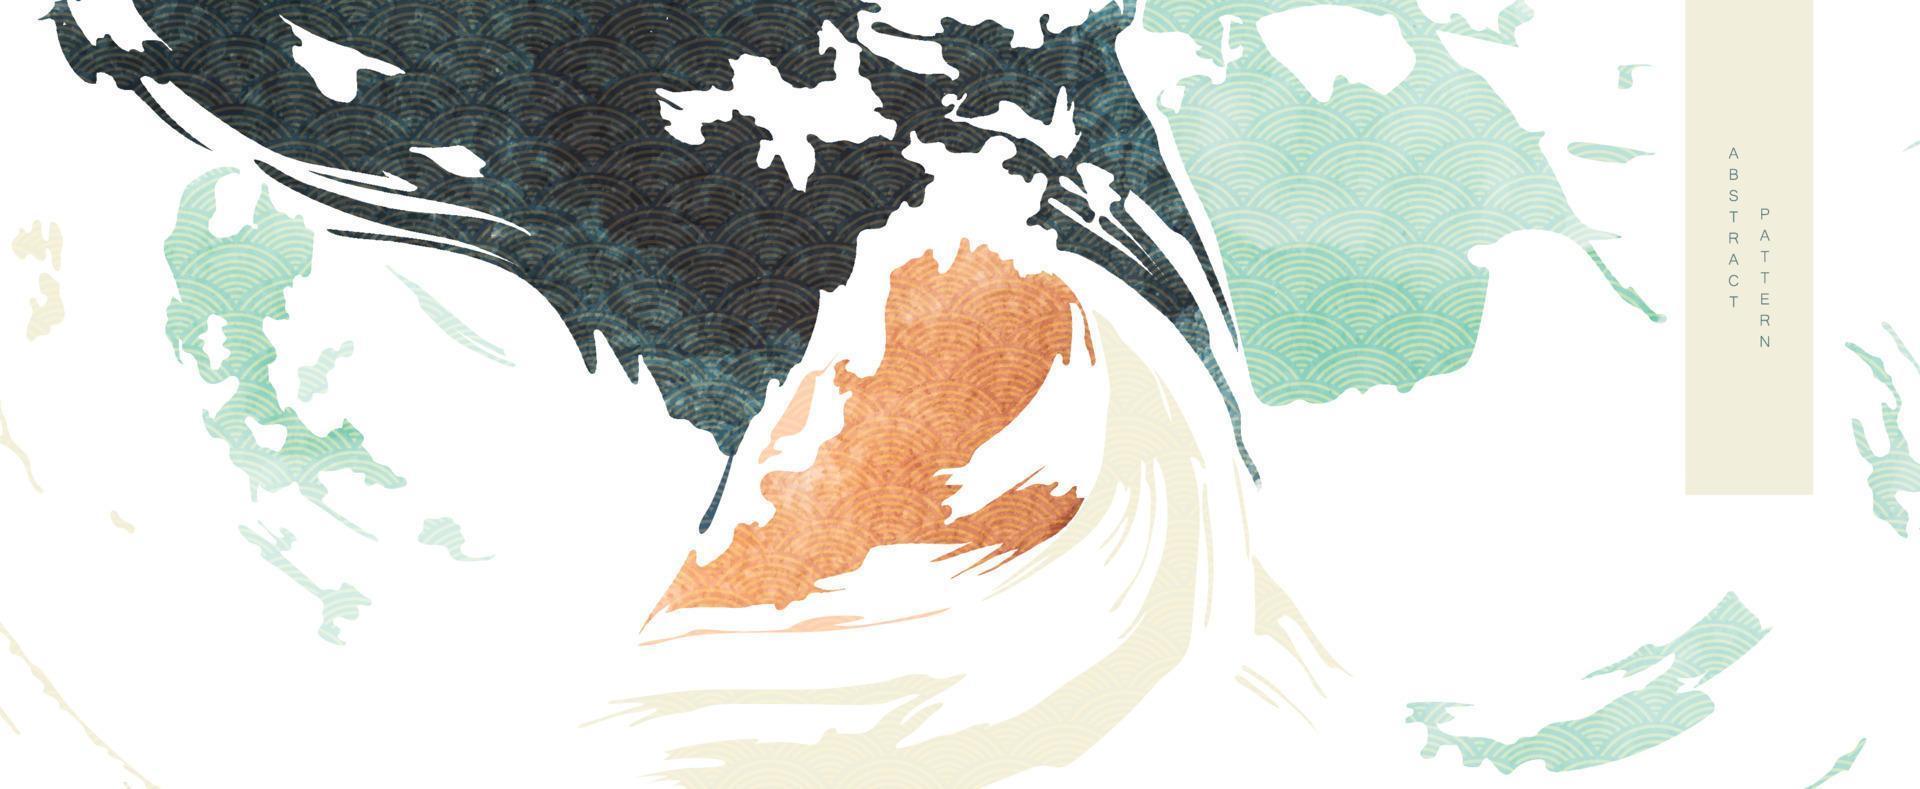 abstract achtergrond in oosters stijl. Chinese nieuw jaar spandoek. waterverf structuur met Japans patroon vector. golvend vormen in oosters sjabloon. berg lay-out ontwerp. vector